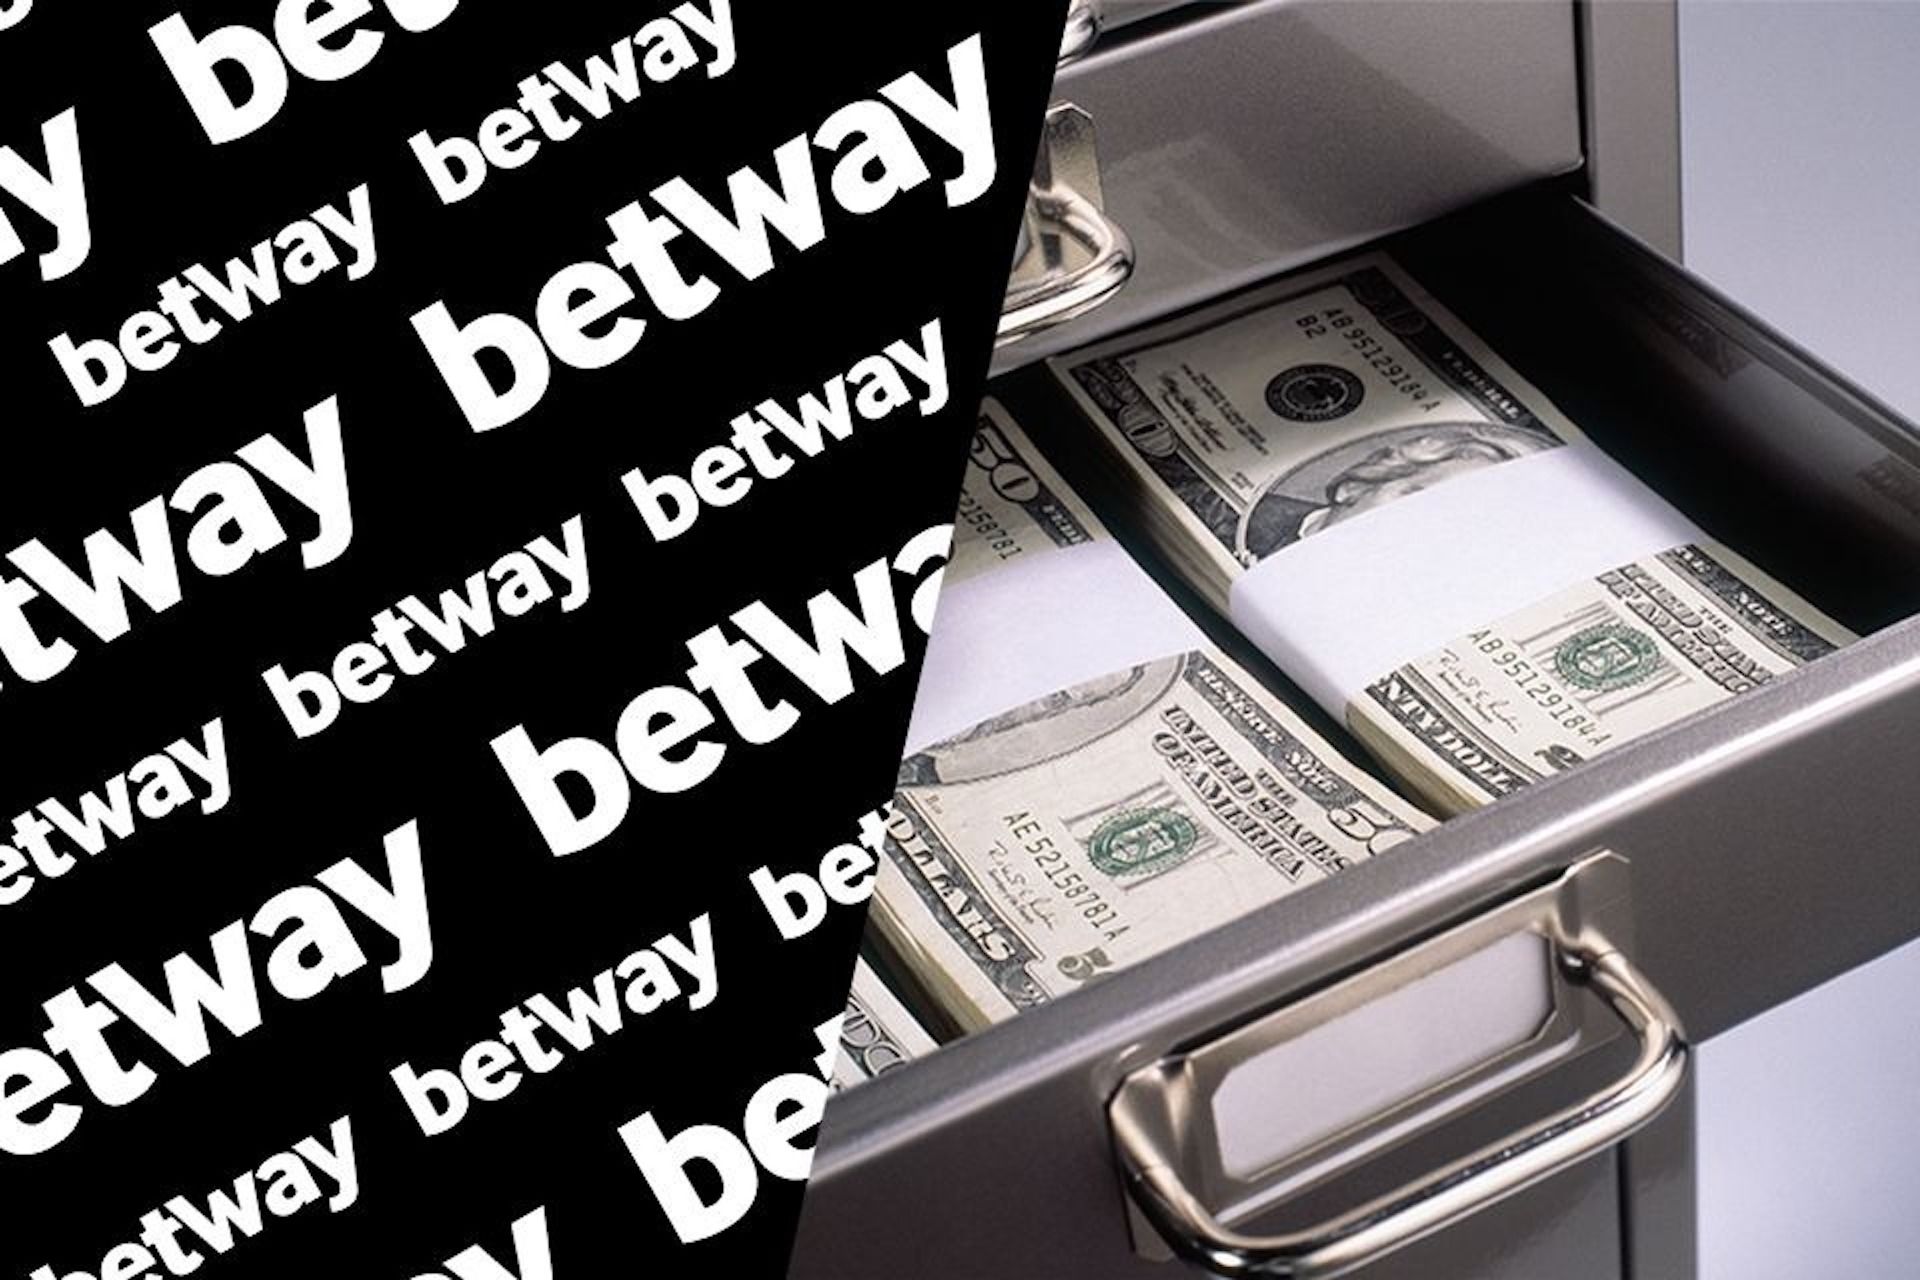 Betway Deposit